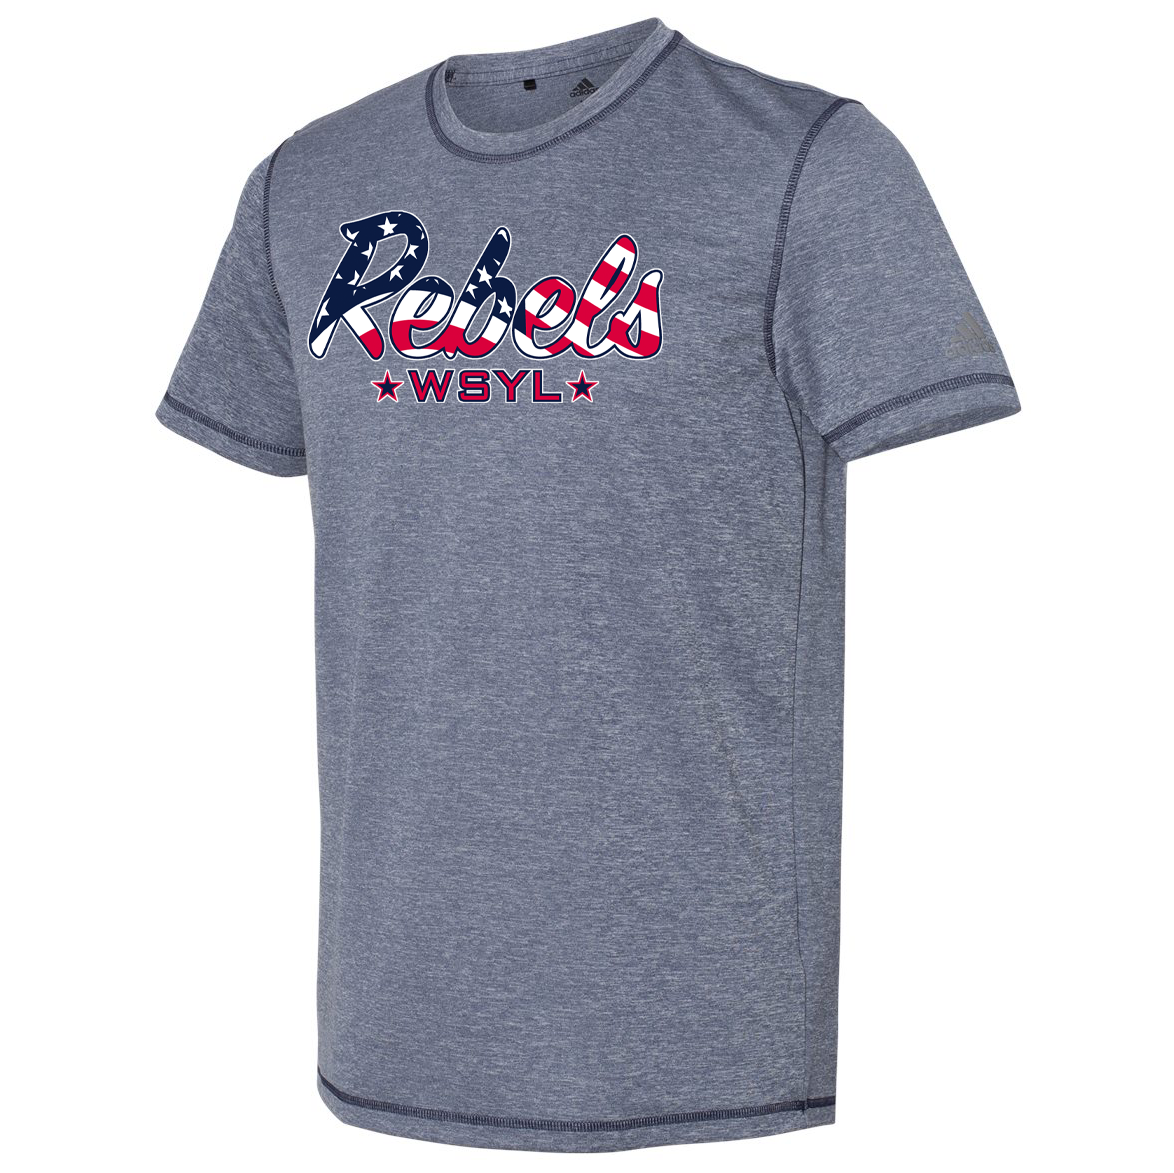 Rebels World Series Youth League Adidas Sport T-Shirt